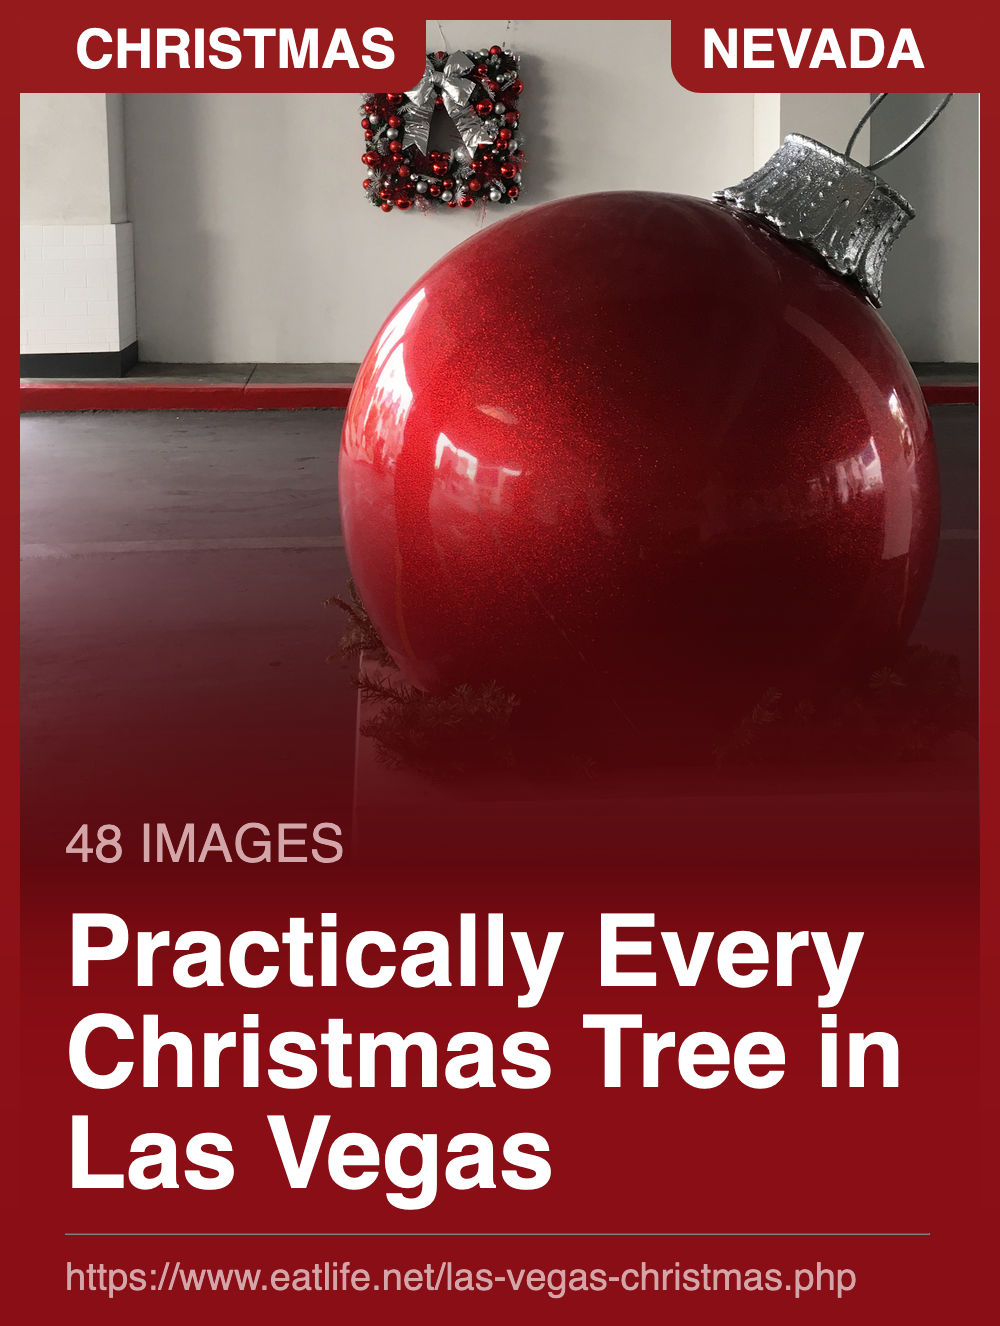 Every Christmas Tree in Vegas